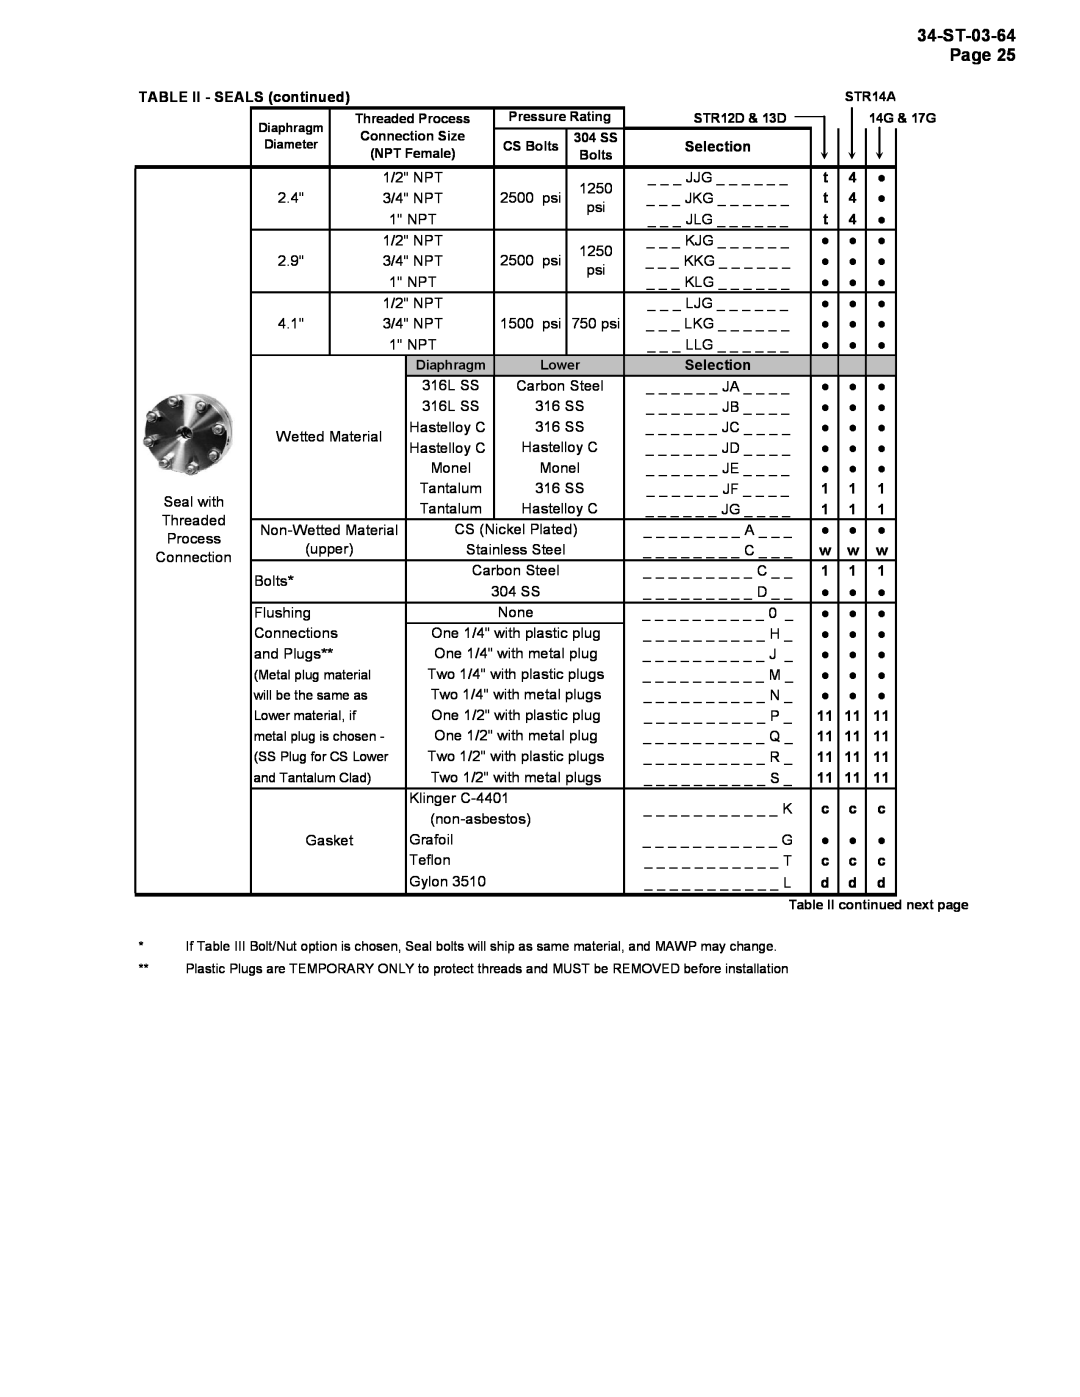 Honeywell STR12D warranty TABLE II - SEALS continued 